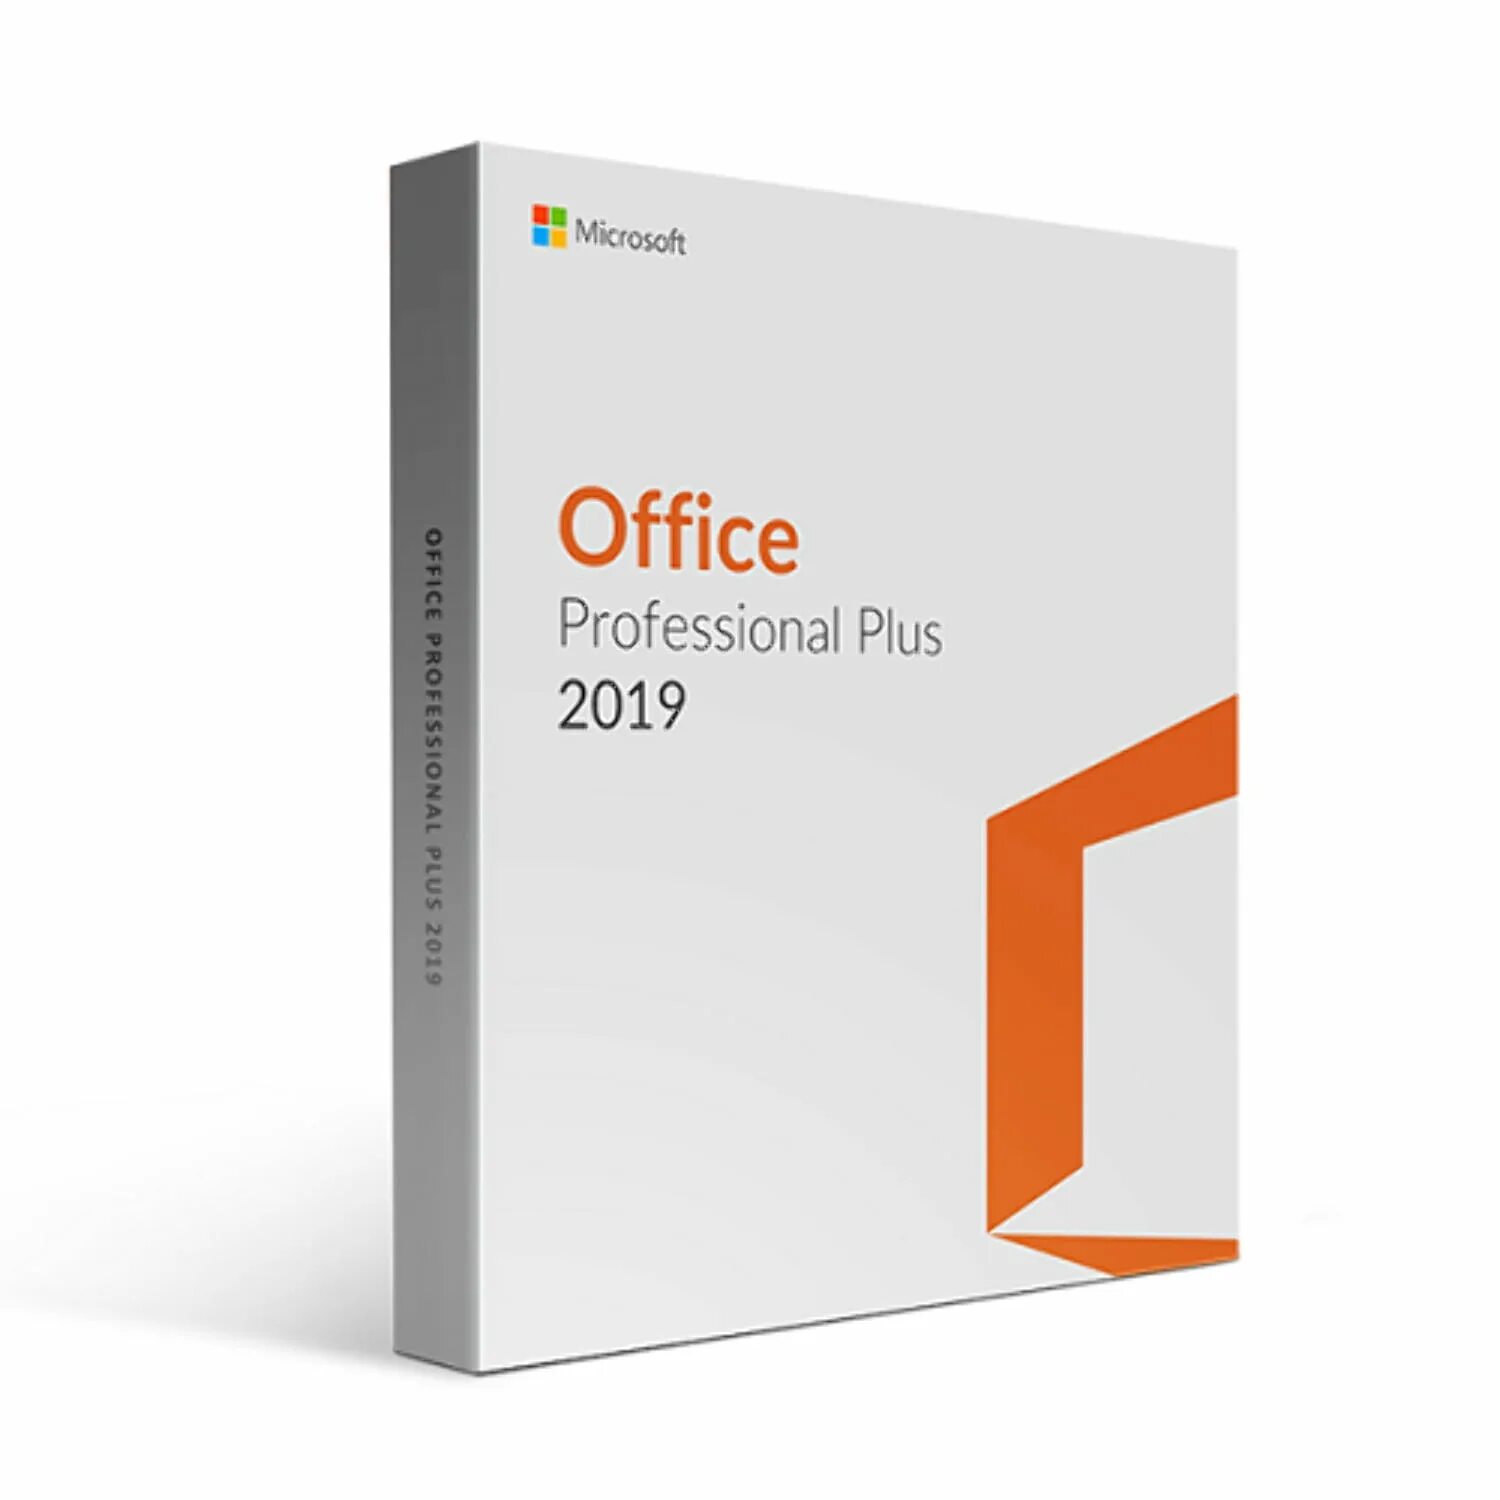 Office 2019 professional Plus. Microsoft Office 2019 Pro Plus. Microsoft Office Pro 2019. Office 2019 профессиональный плюс.